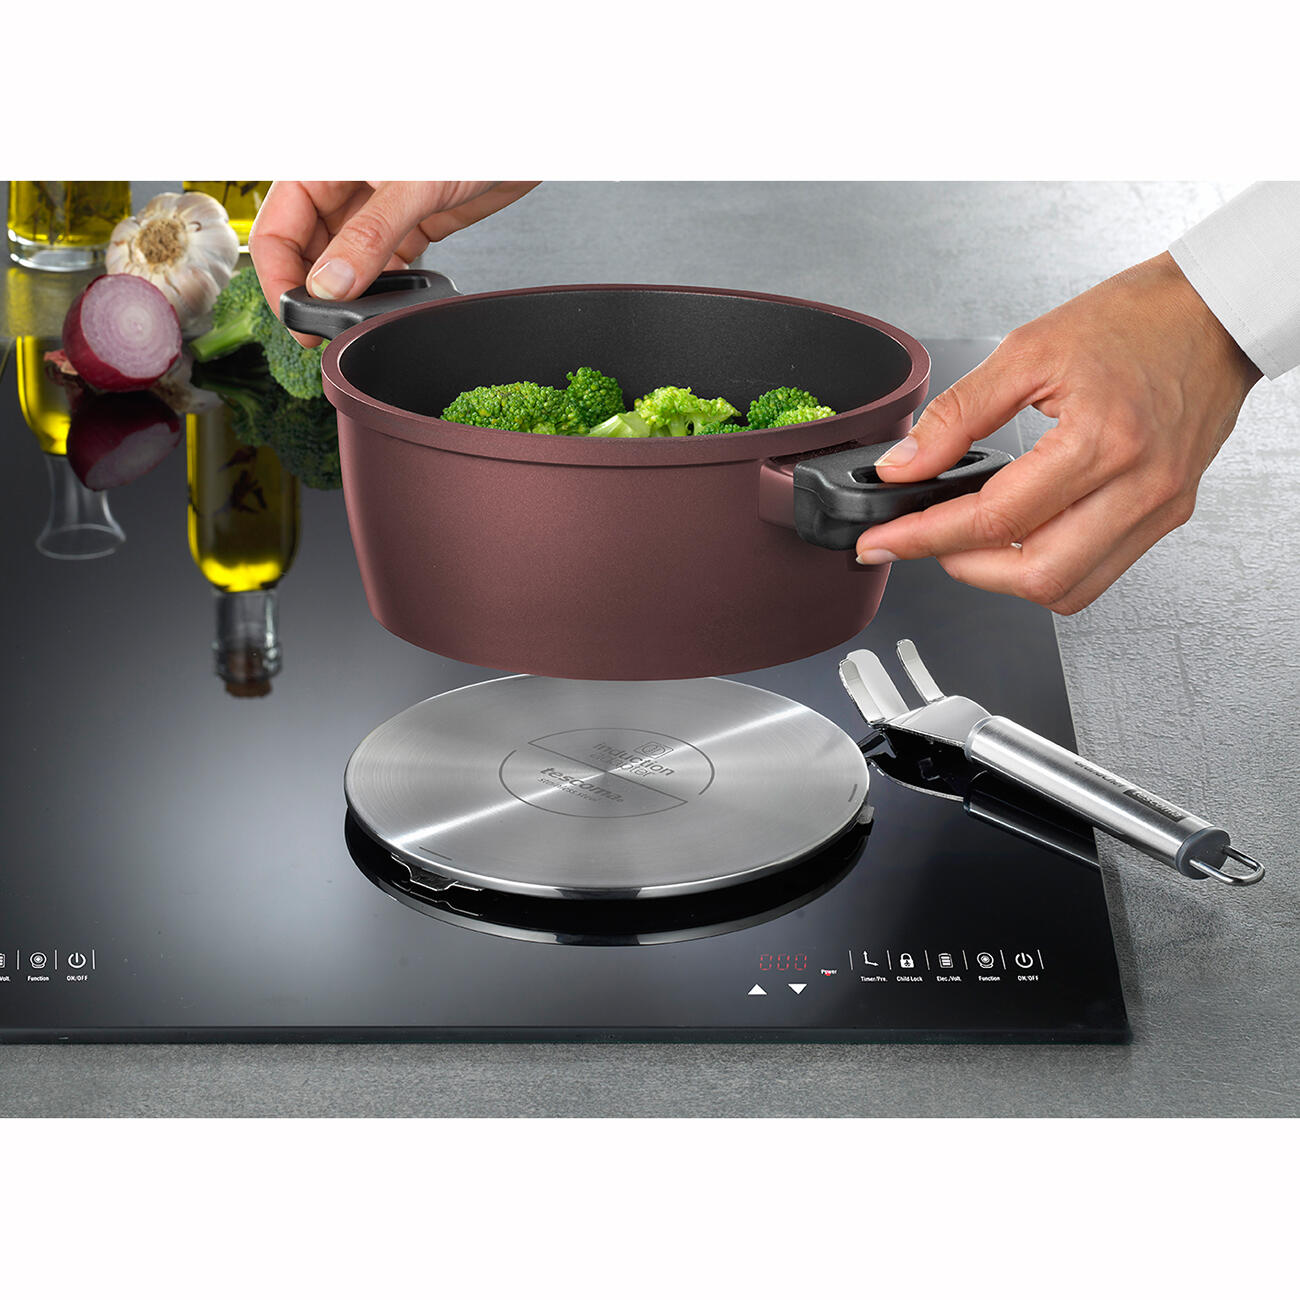 STONELINE® poêle wok 30 cm - Made in Germany, poignée amovible, induction